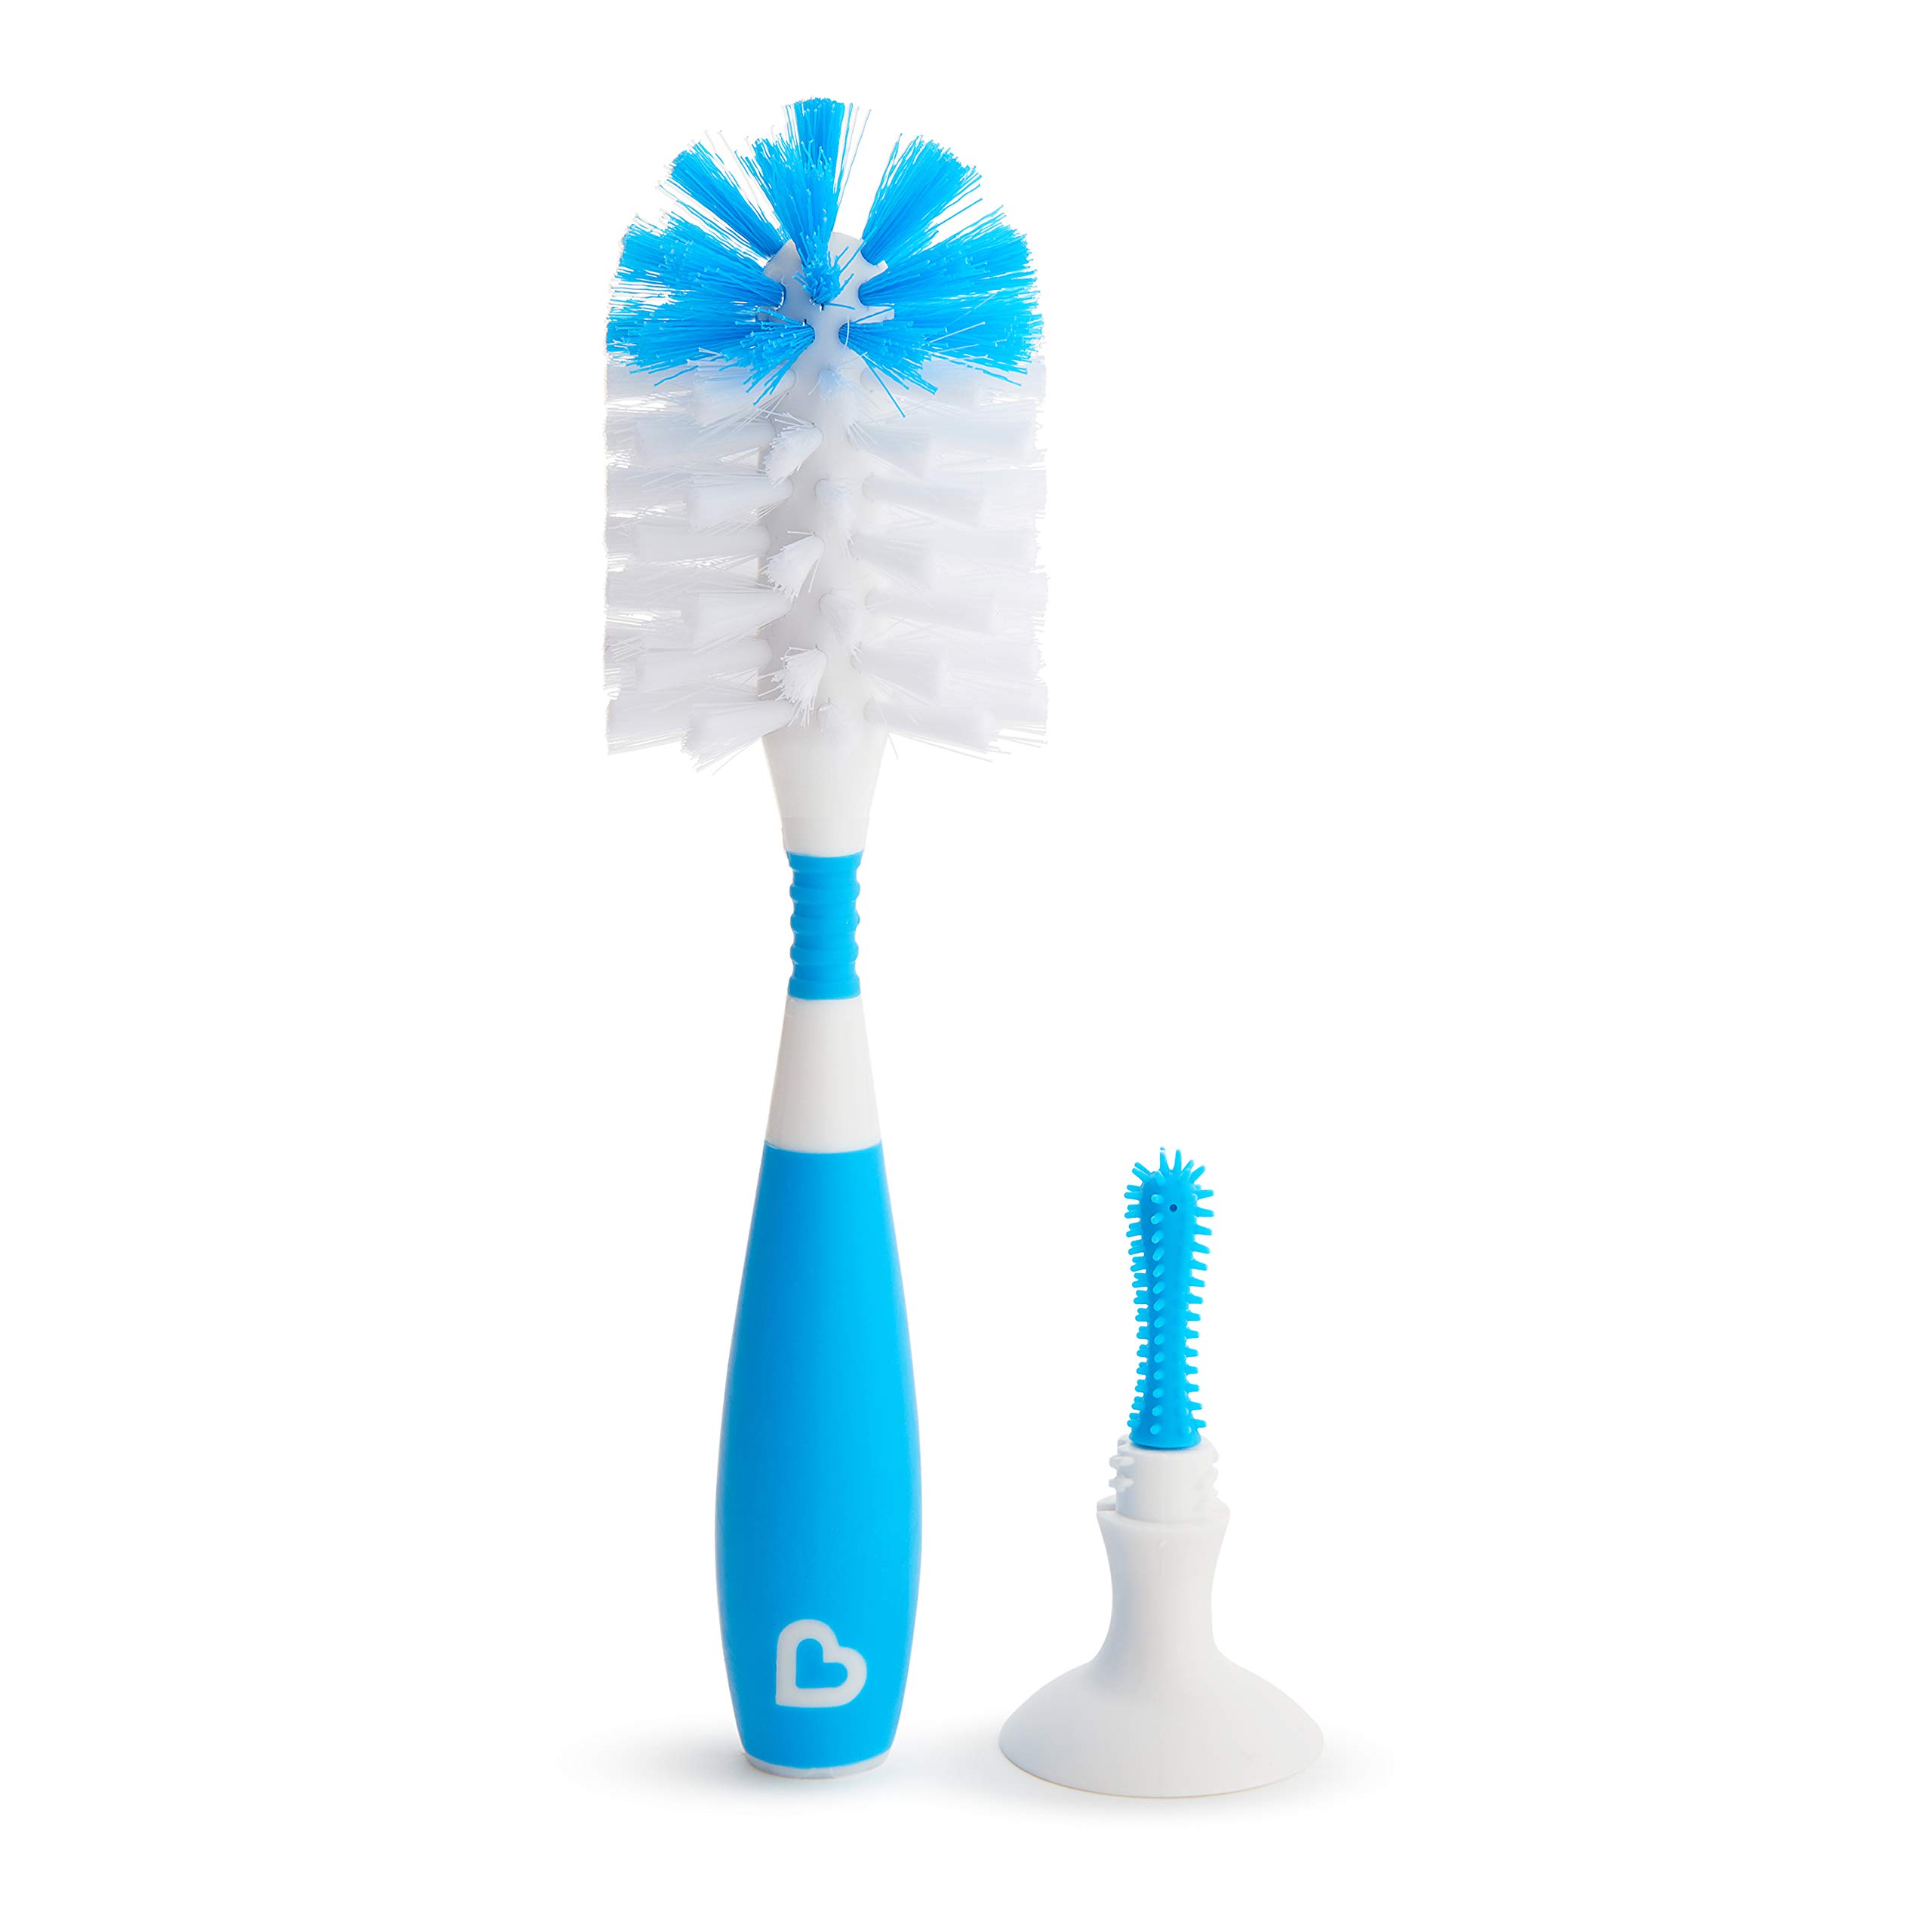 Munchkin® Bristle™ Bottle Brush, Blue